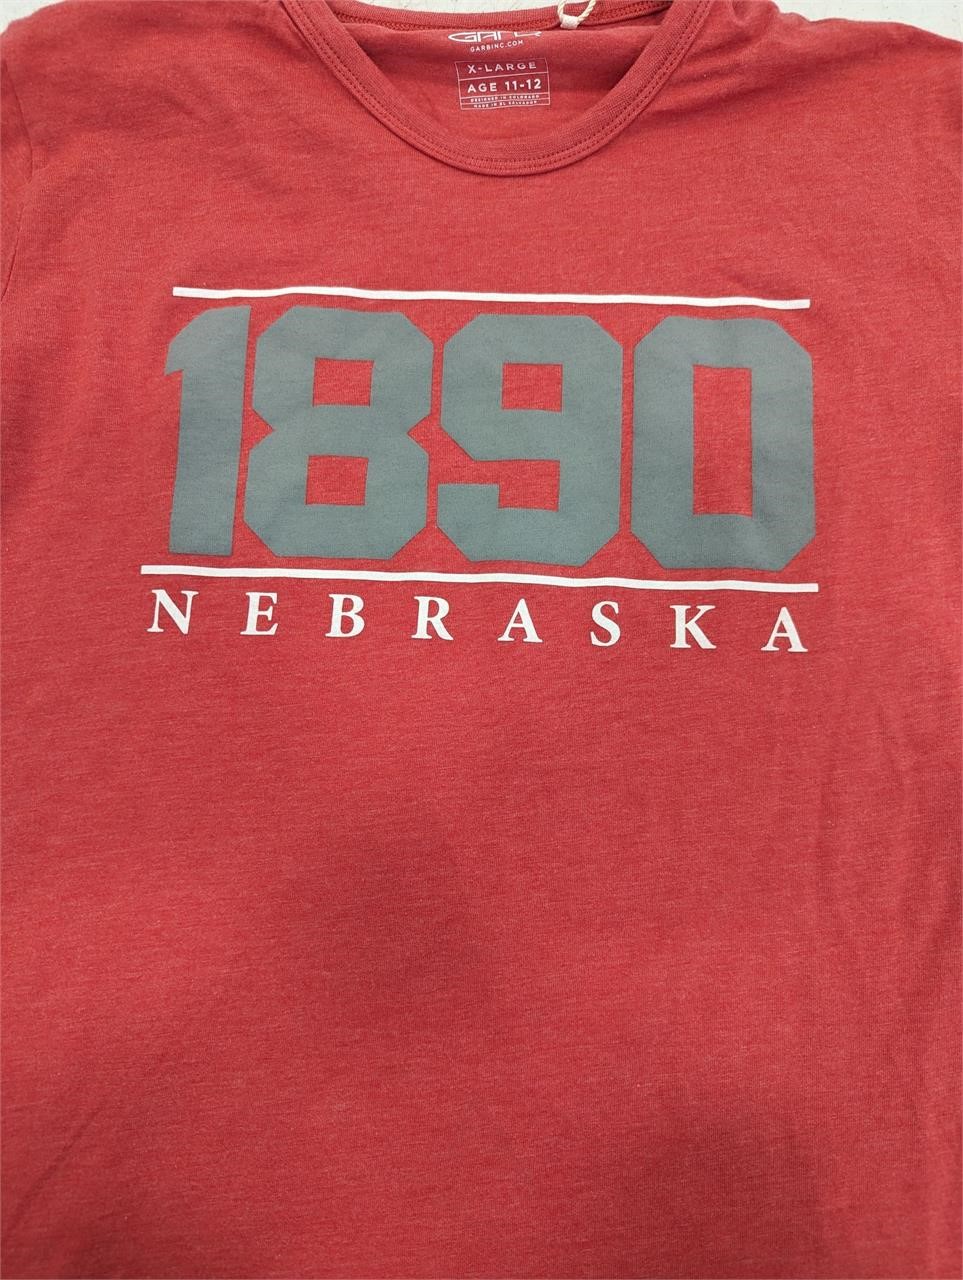 Child X-Large 1890 Nebraska T-Shirt